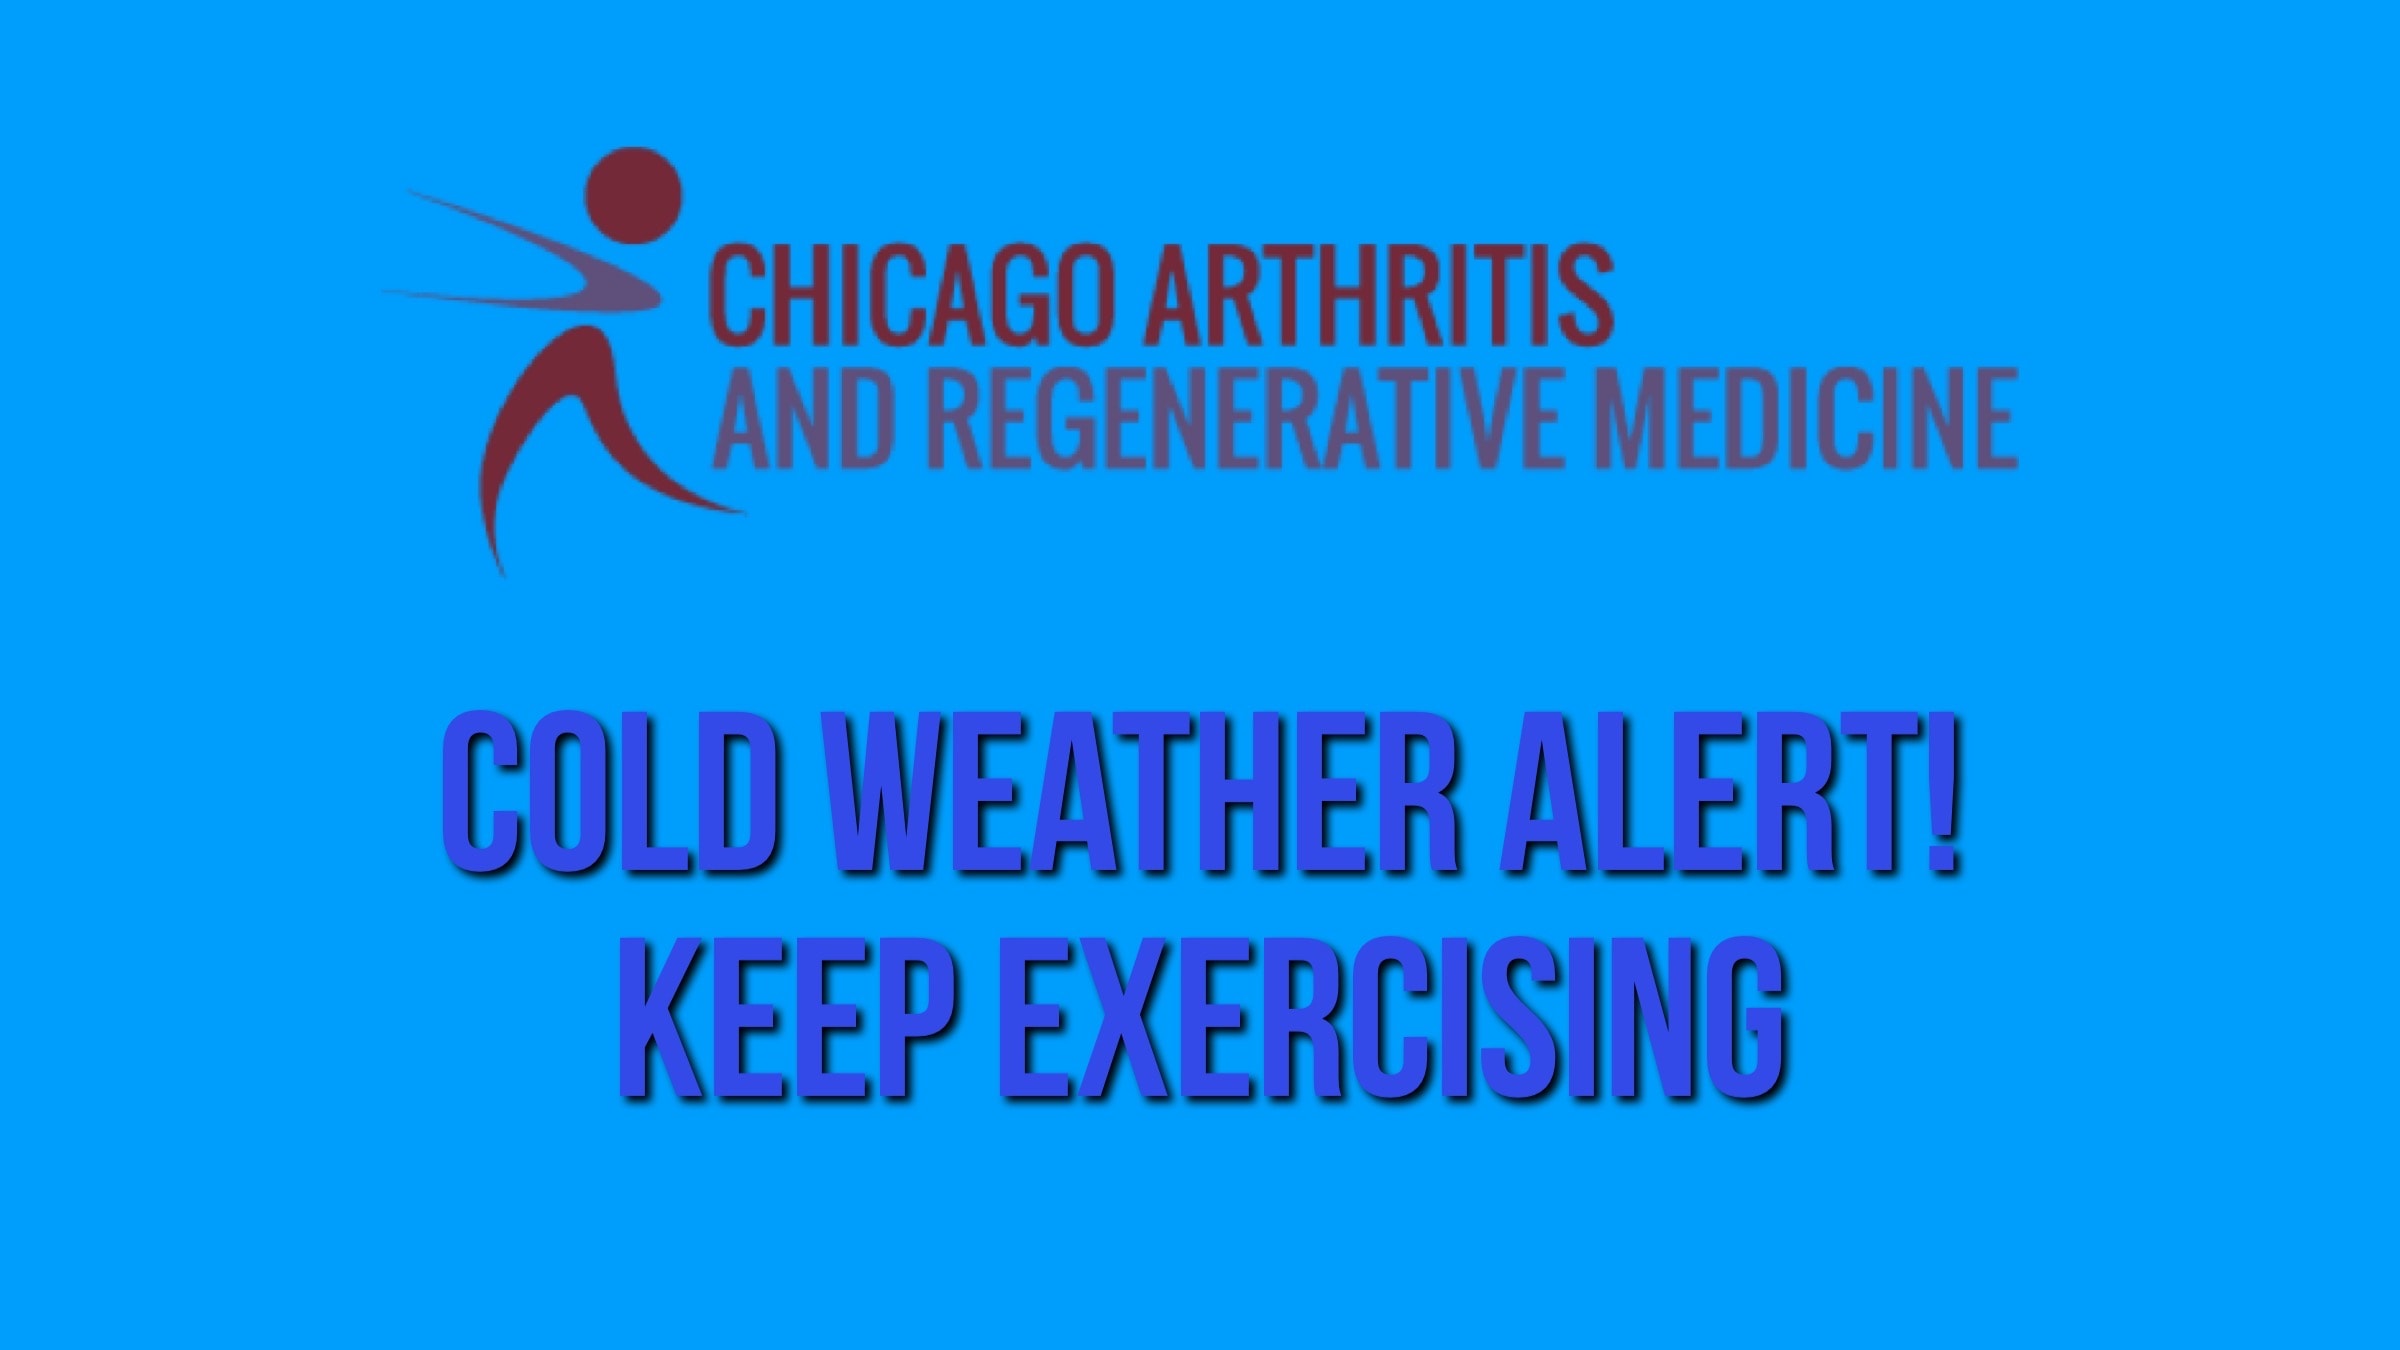 Cold Alert! Keep Exercising.